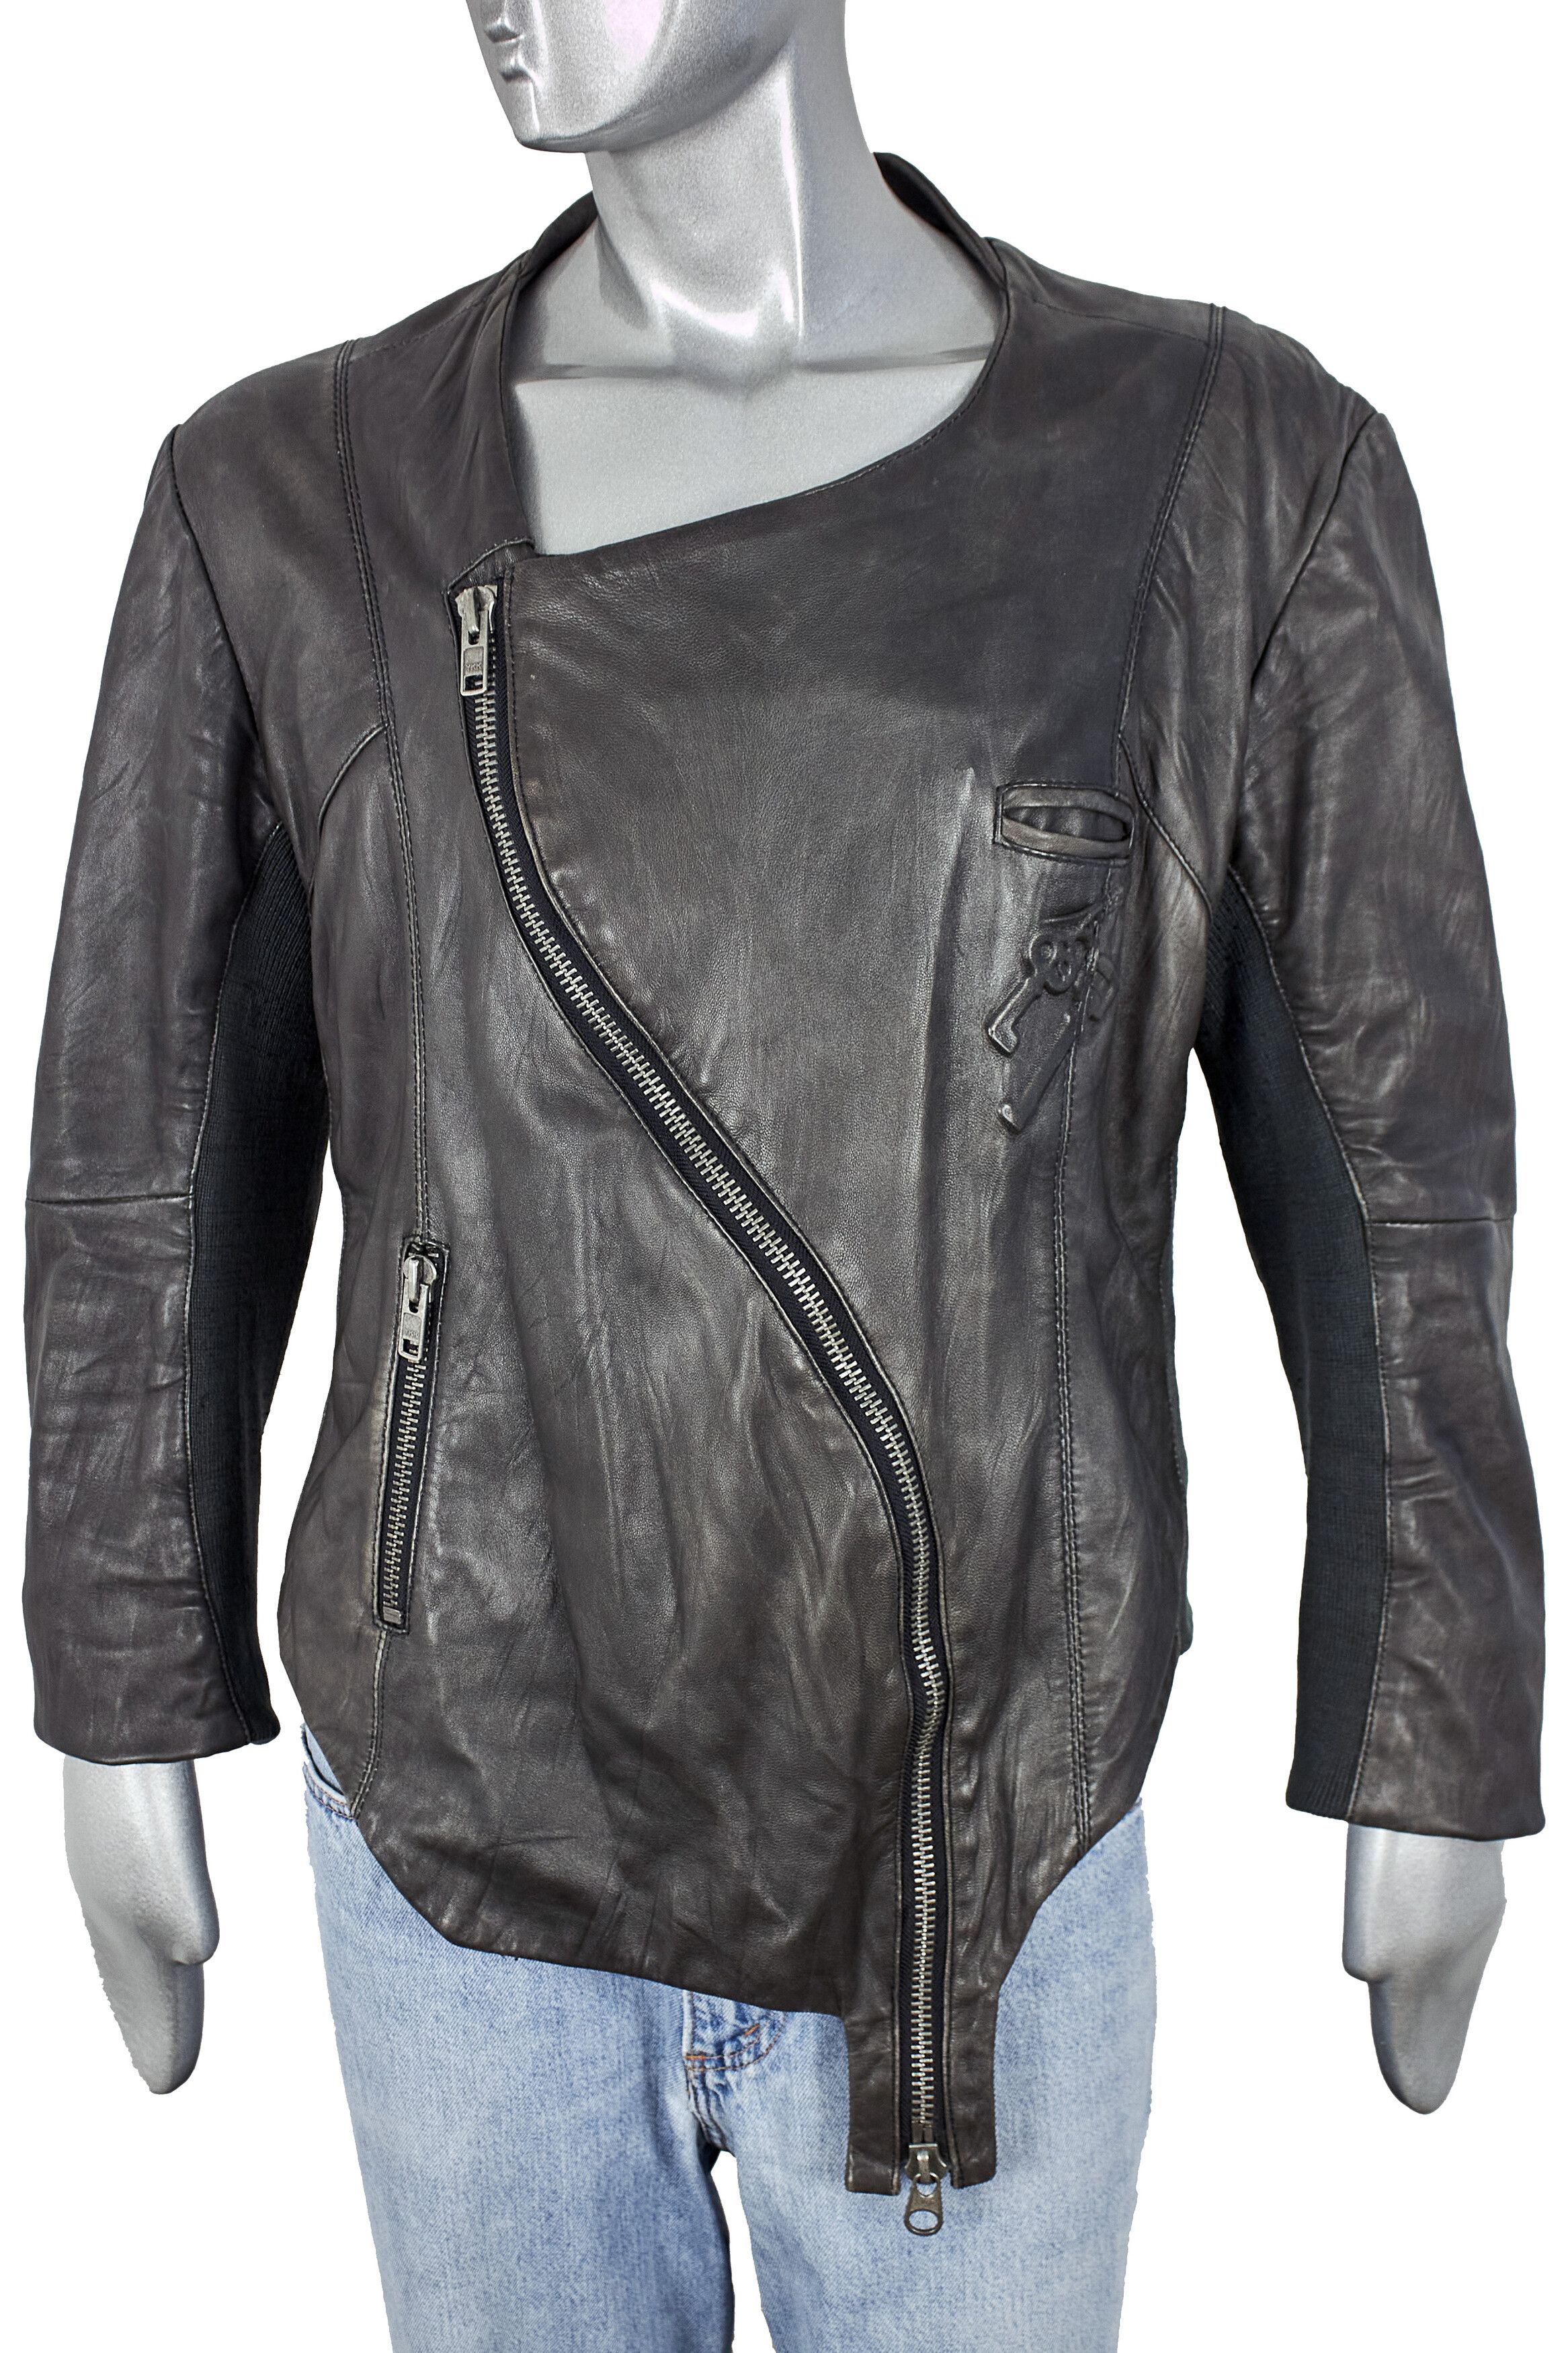 Delusion Delusion futuristic designer men's leather biker jacket Size US XL / EU 56 / 4 - 4 Thumbnail